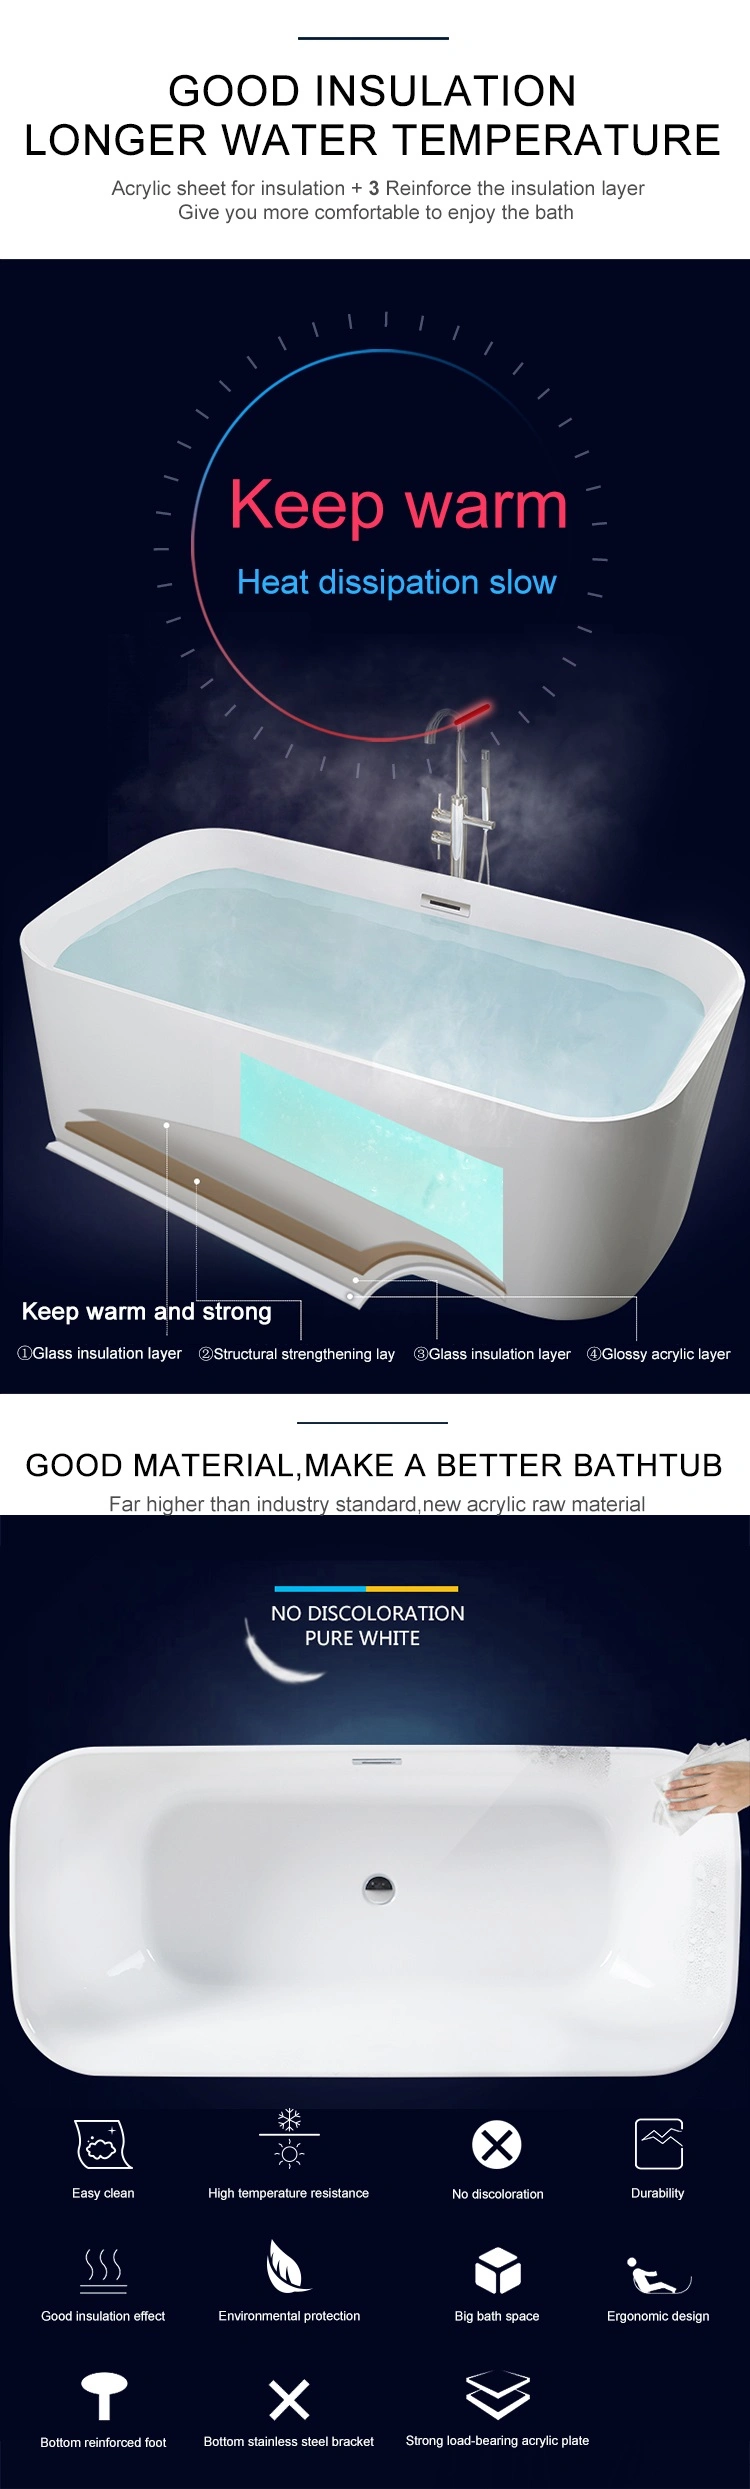 Acrylic Bath Made in China Oval Free Standing Bath Tub